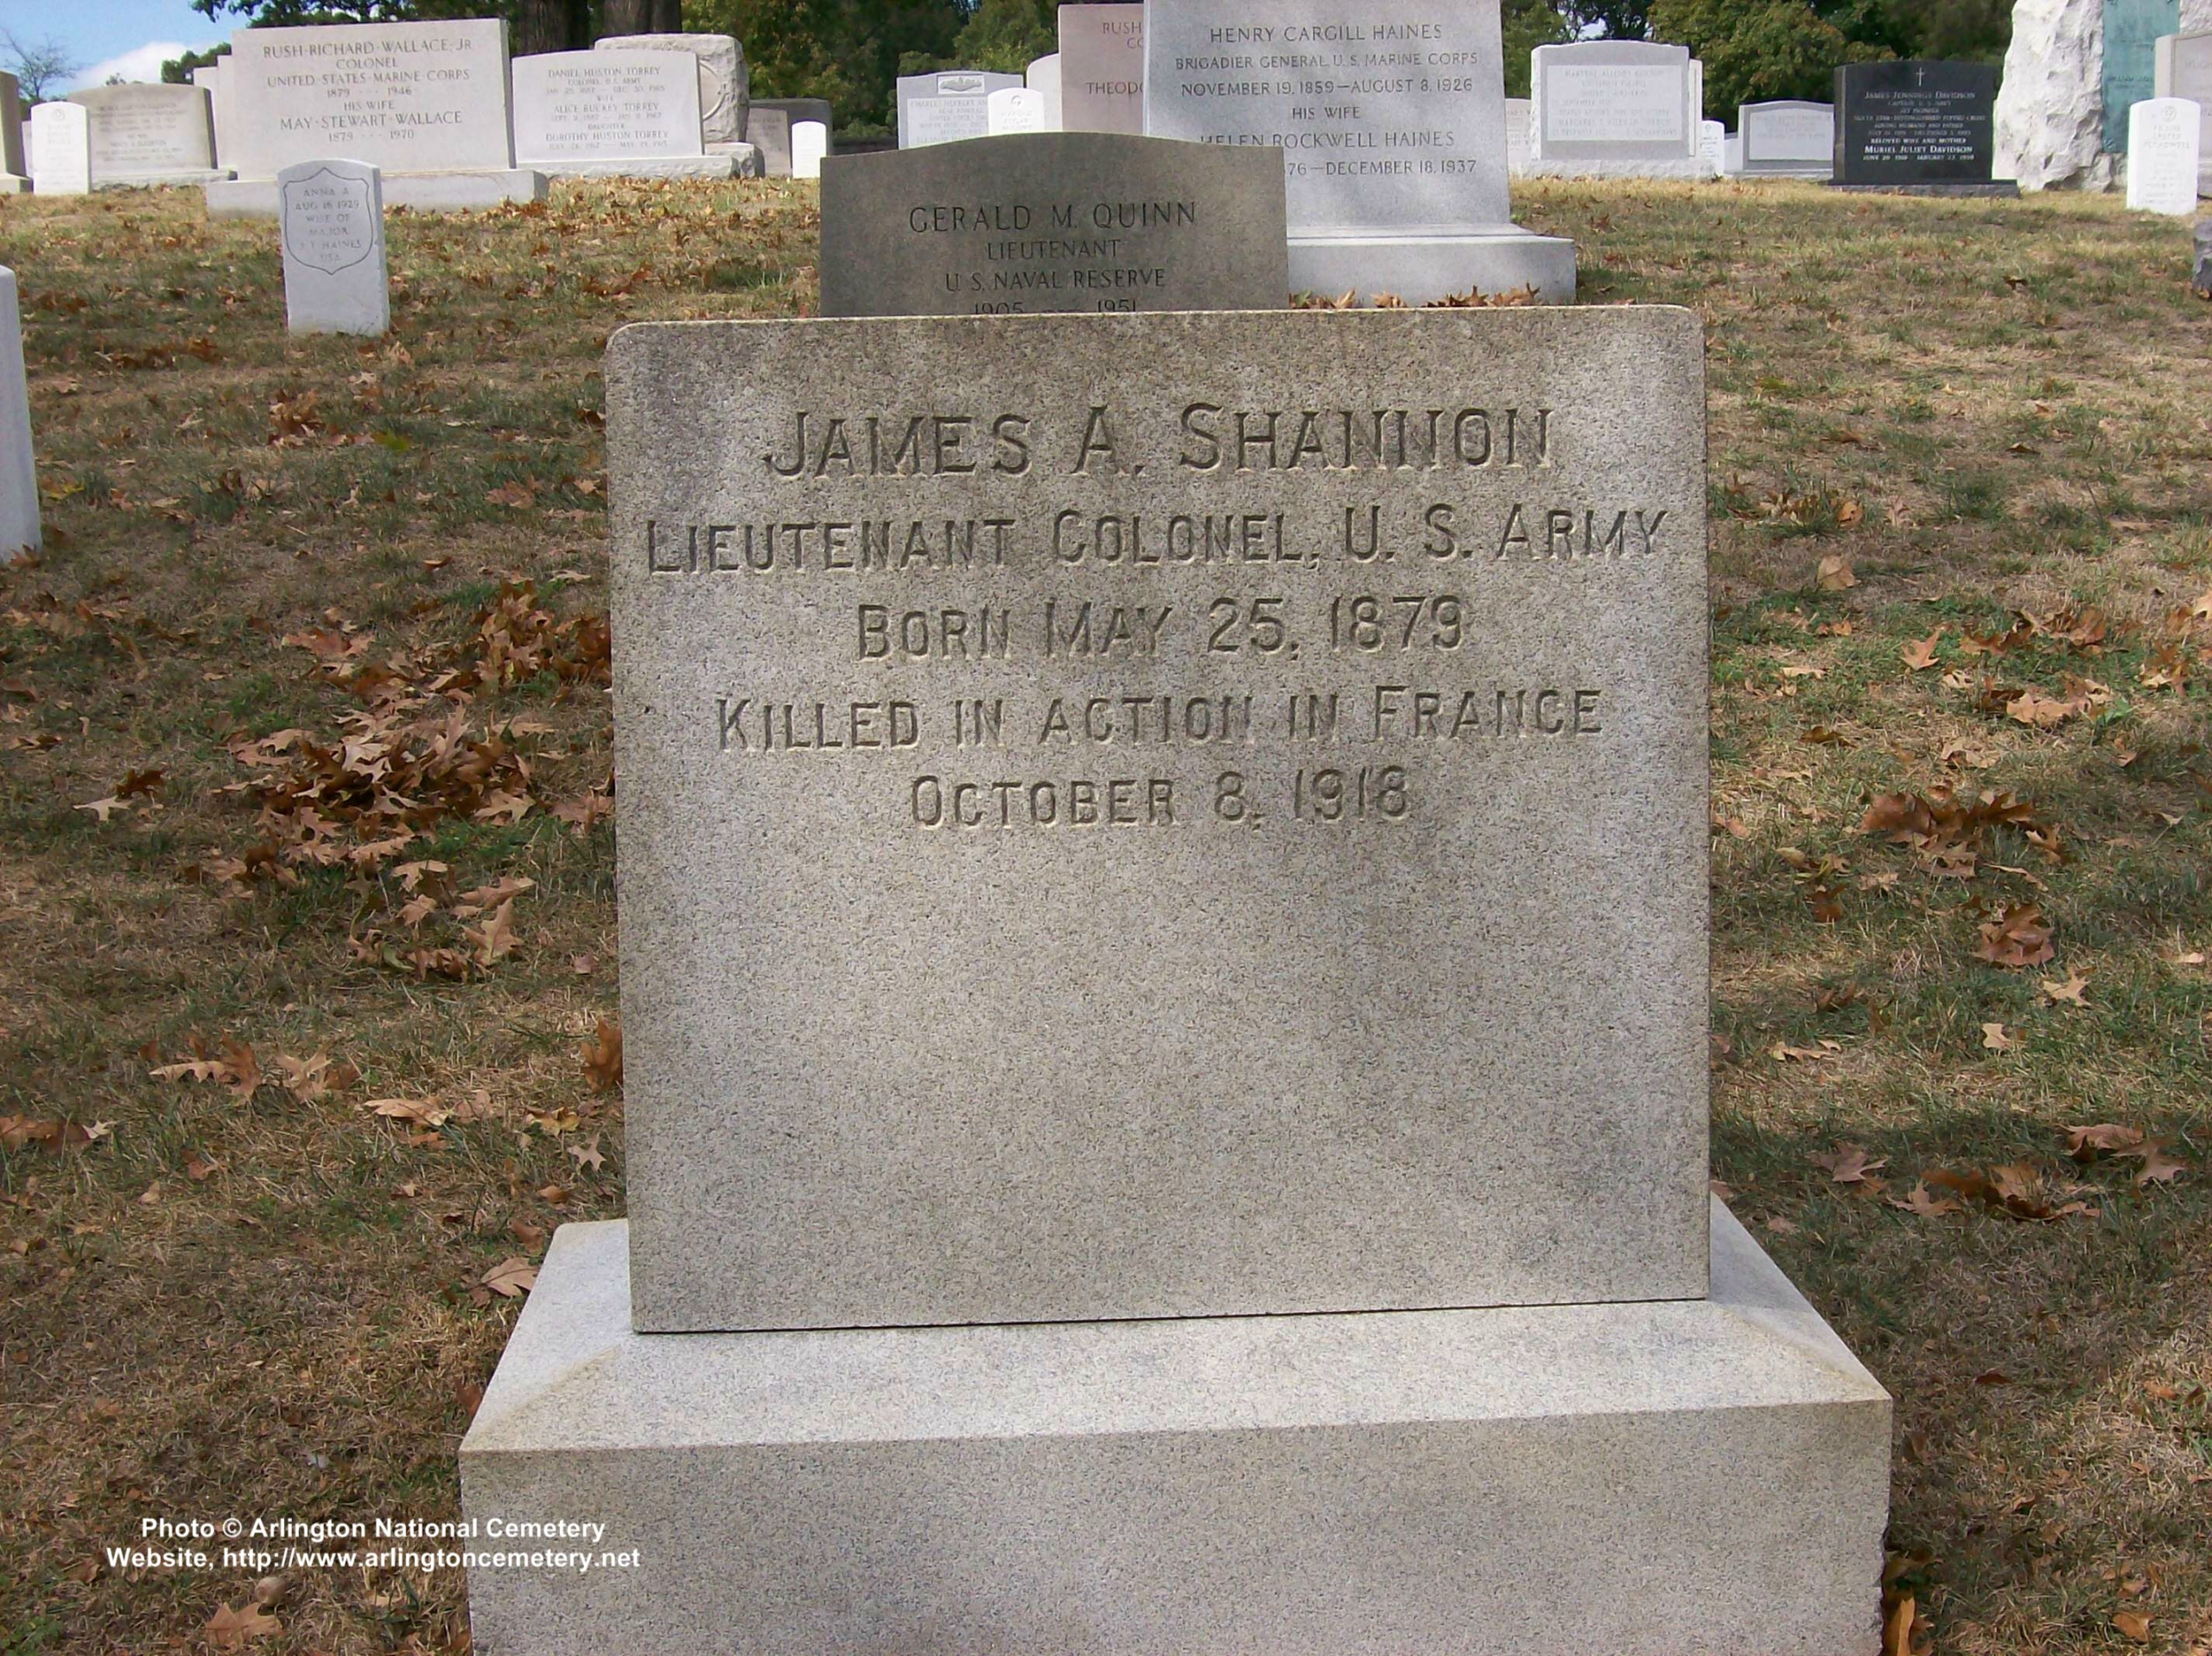 jashannon-gravesite-photo-october-2007-001